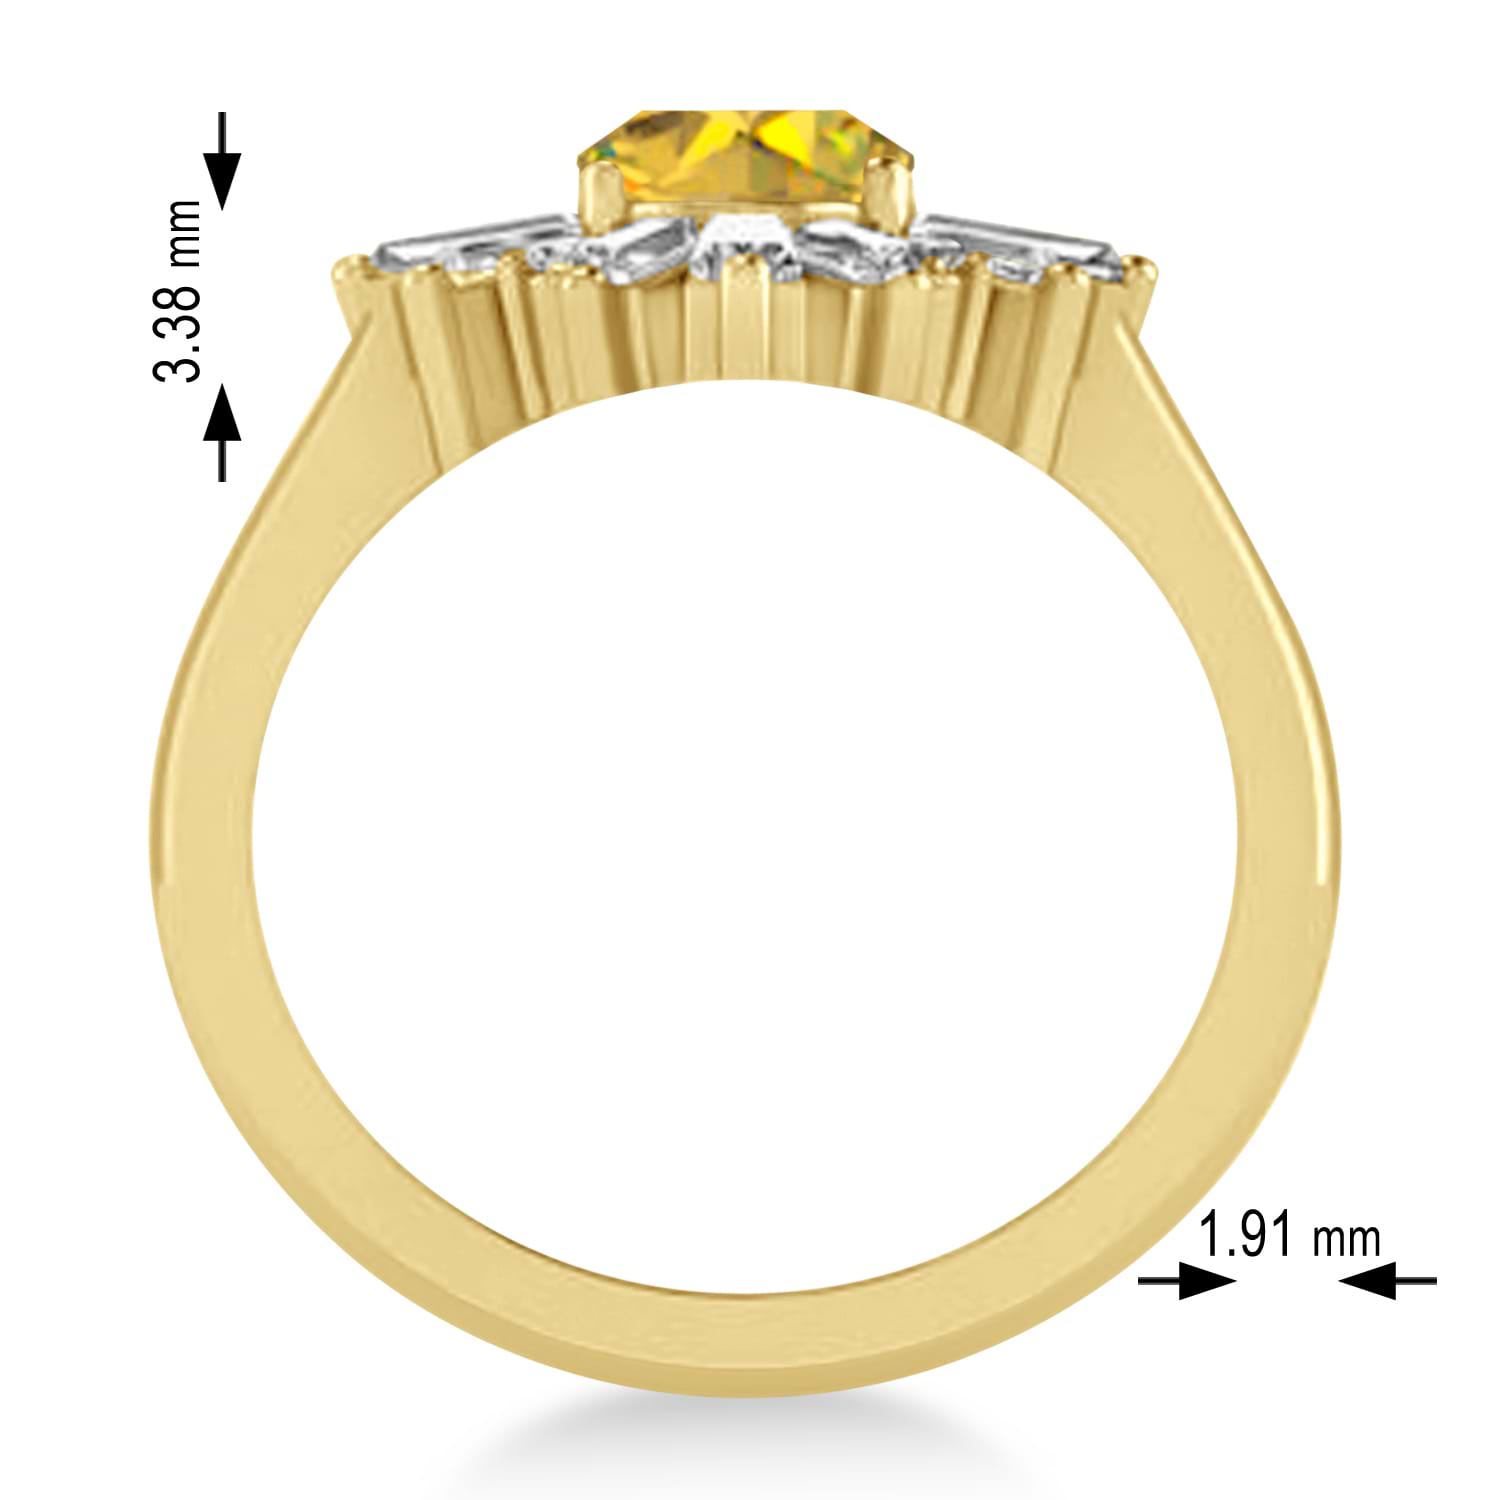 Yellow Sapphire & Diamond Oval Cut Ballerina Engagement Ring 18k Yellow Gold (3.06 ctw)